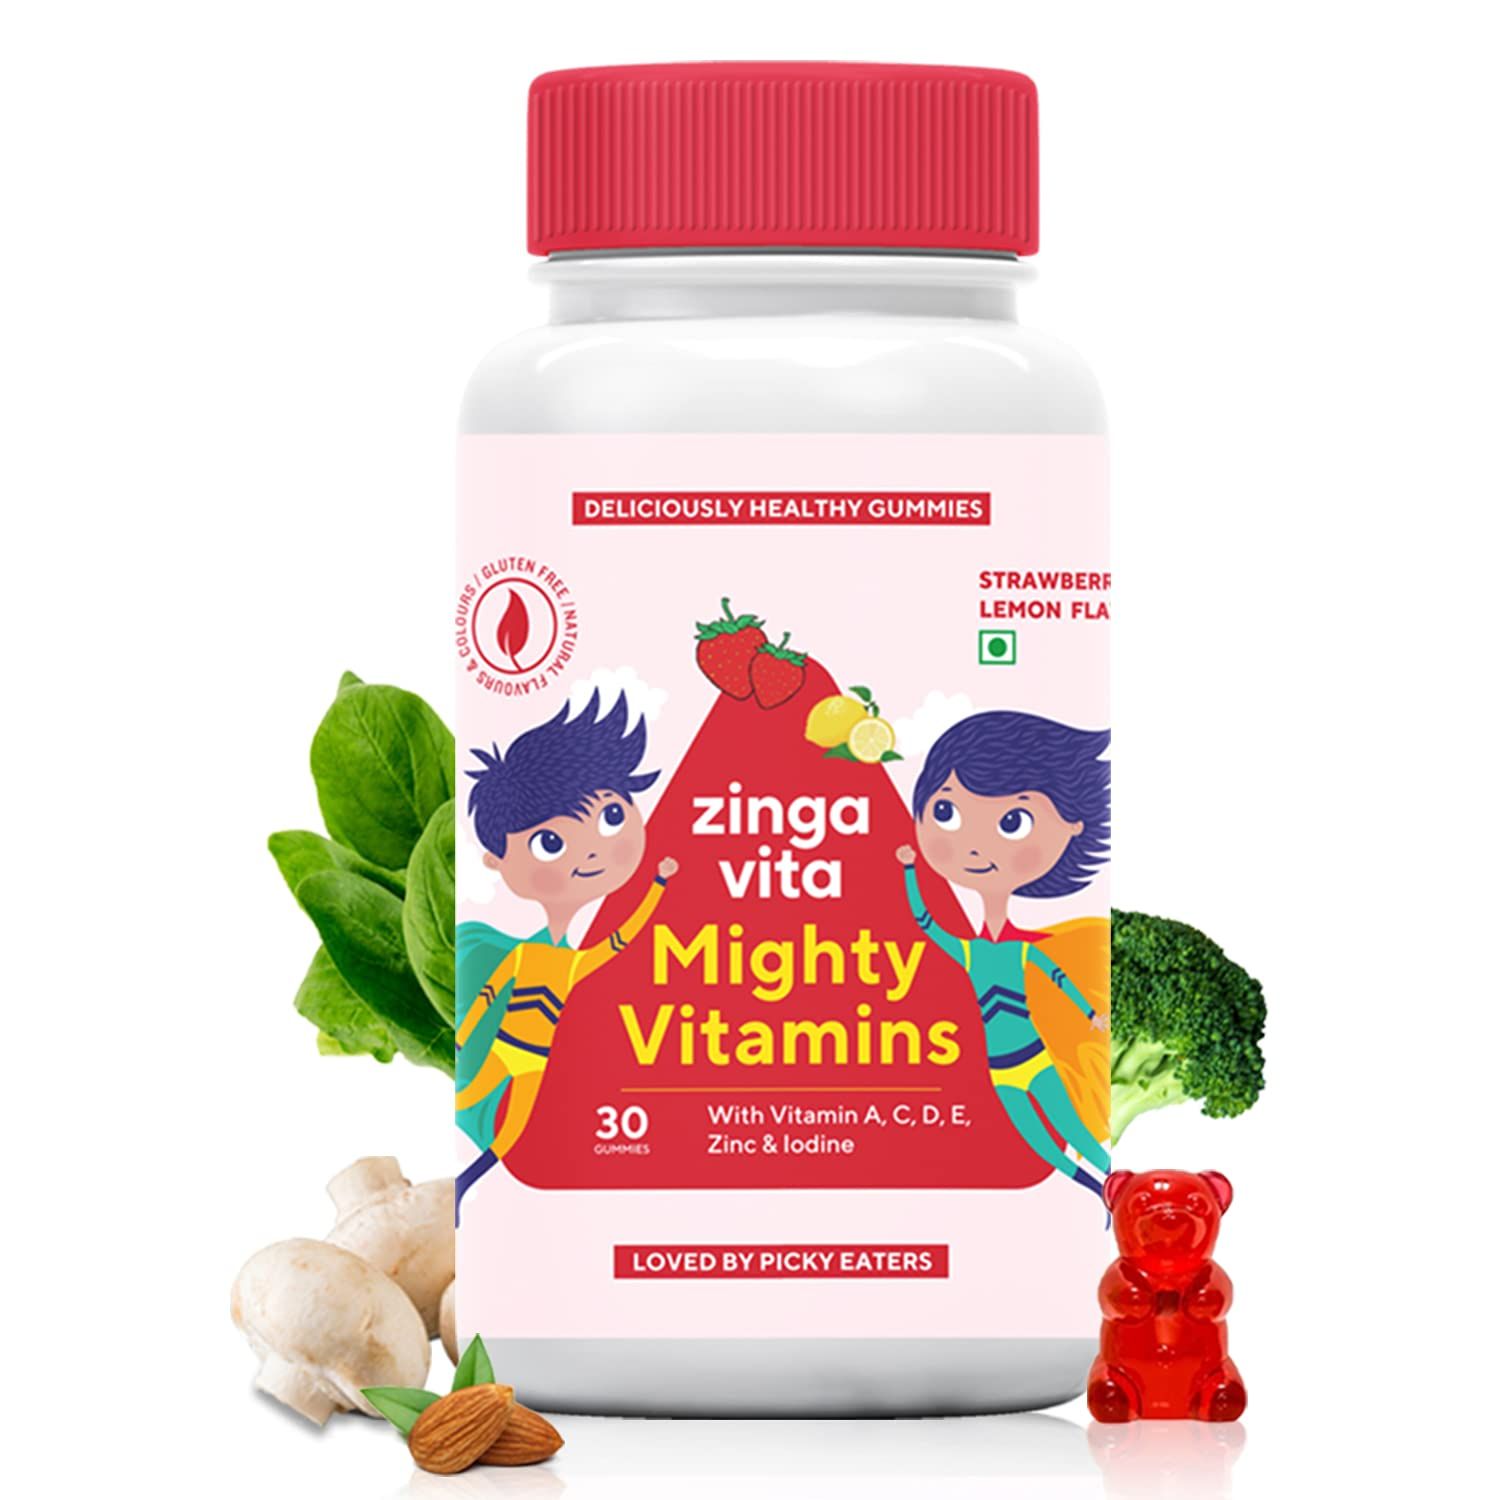 Zingavita Mighty Multivitamins Image